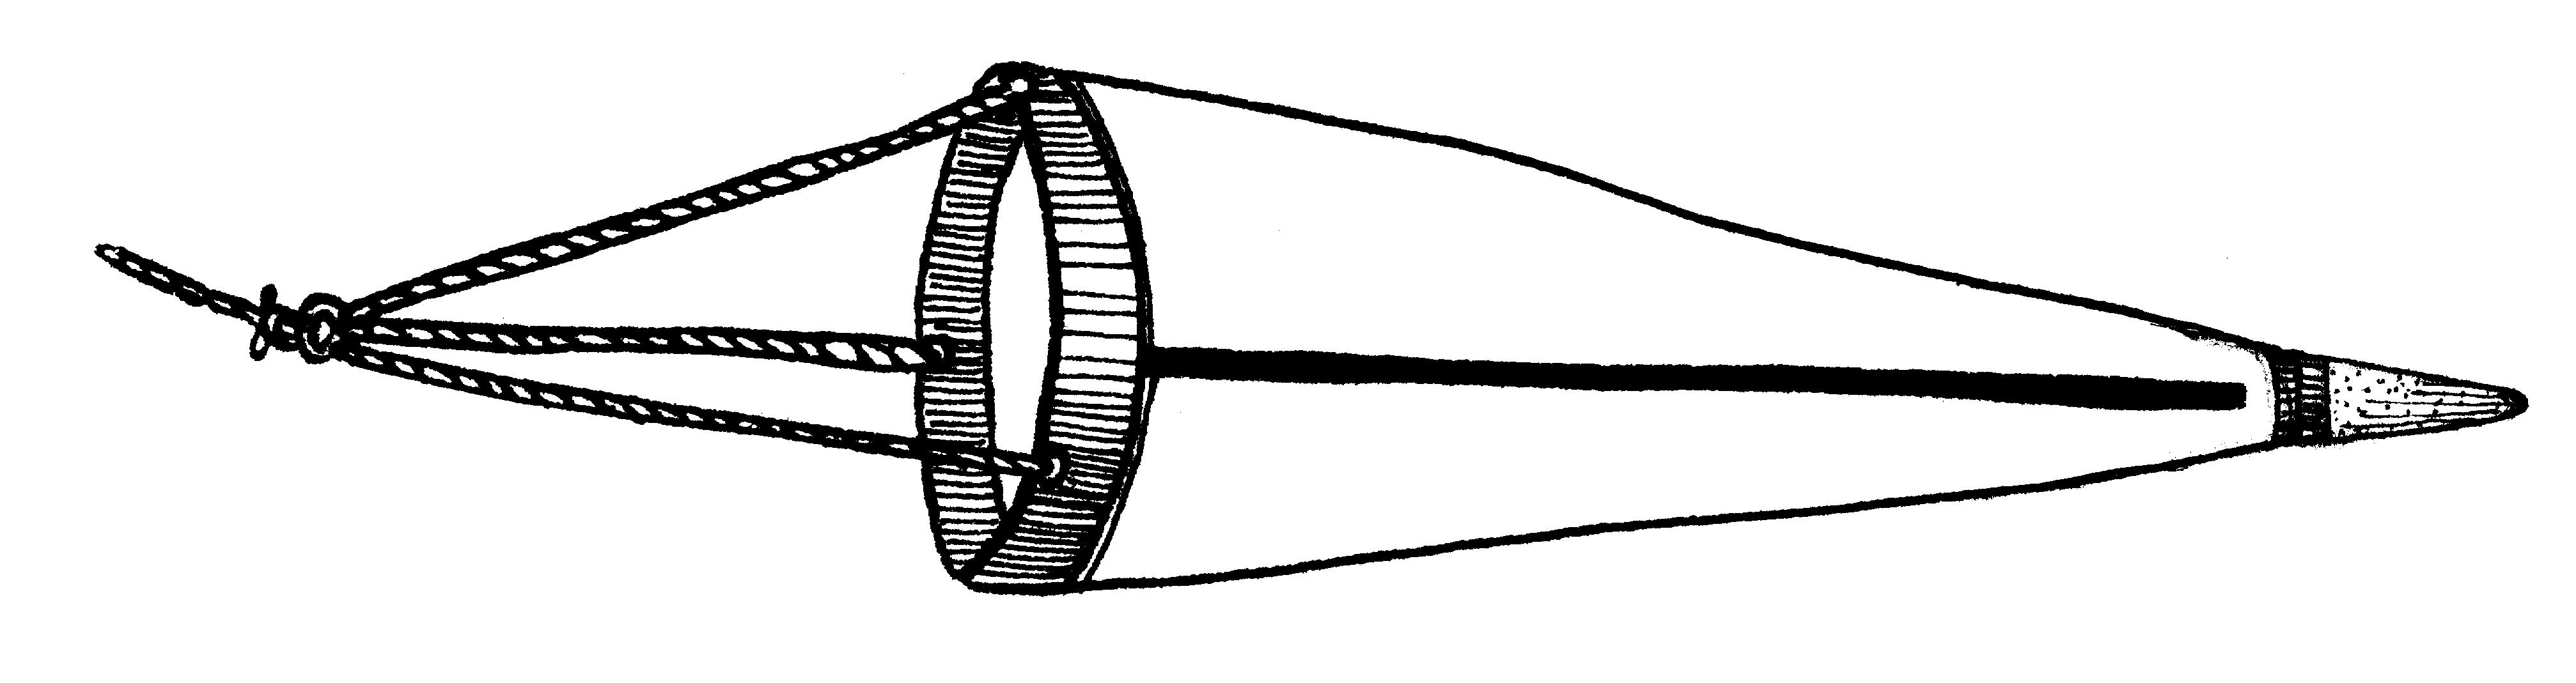 plankton net—cone shaped